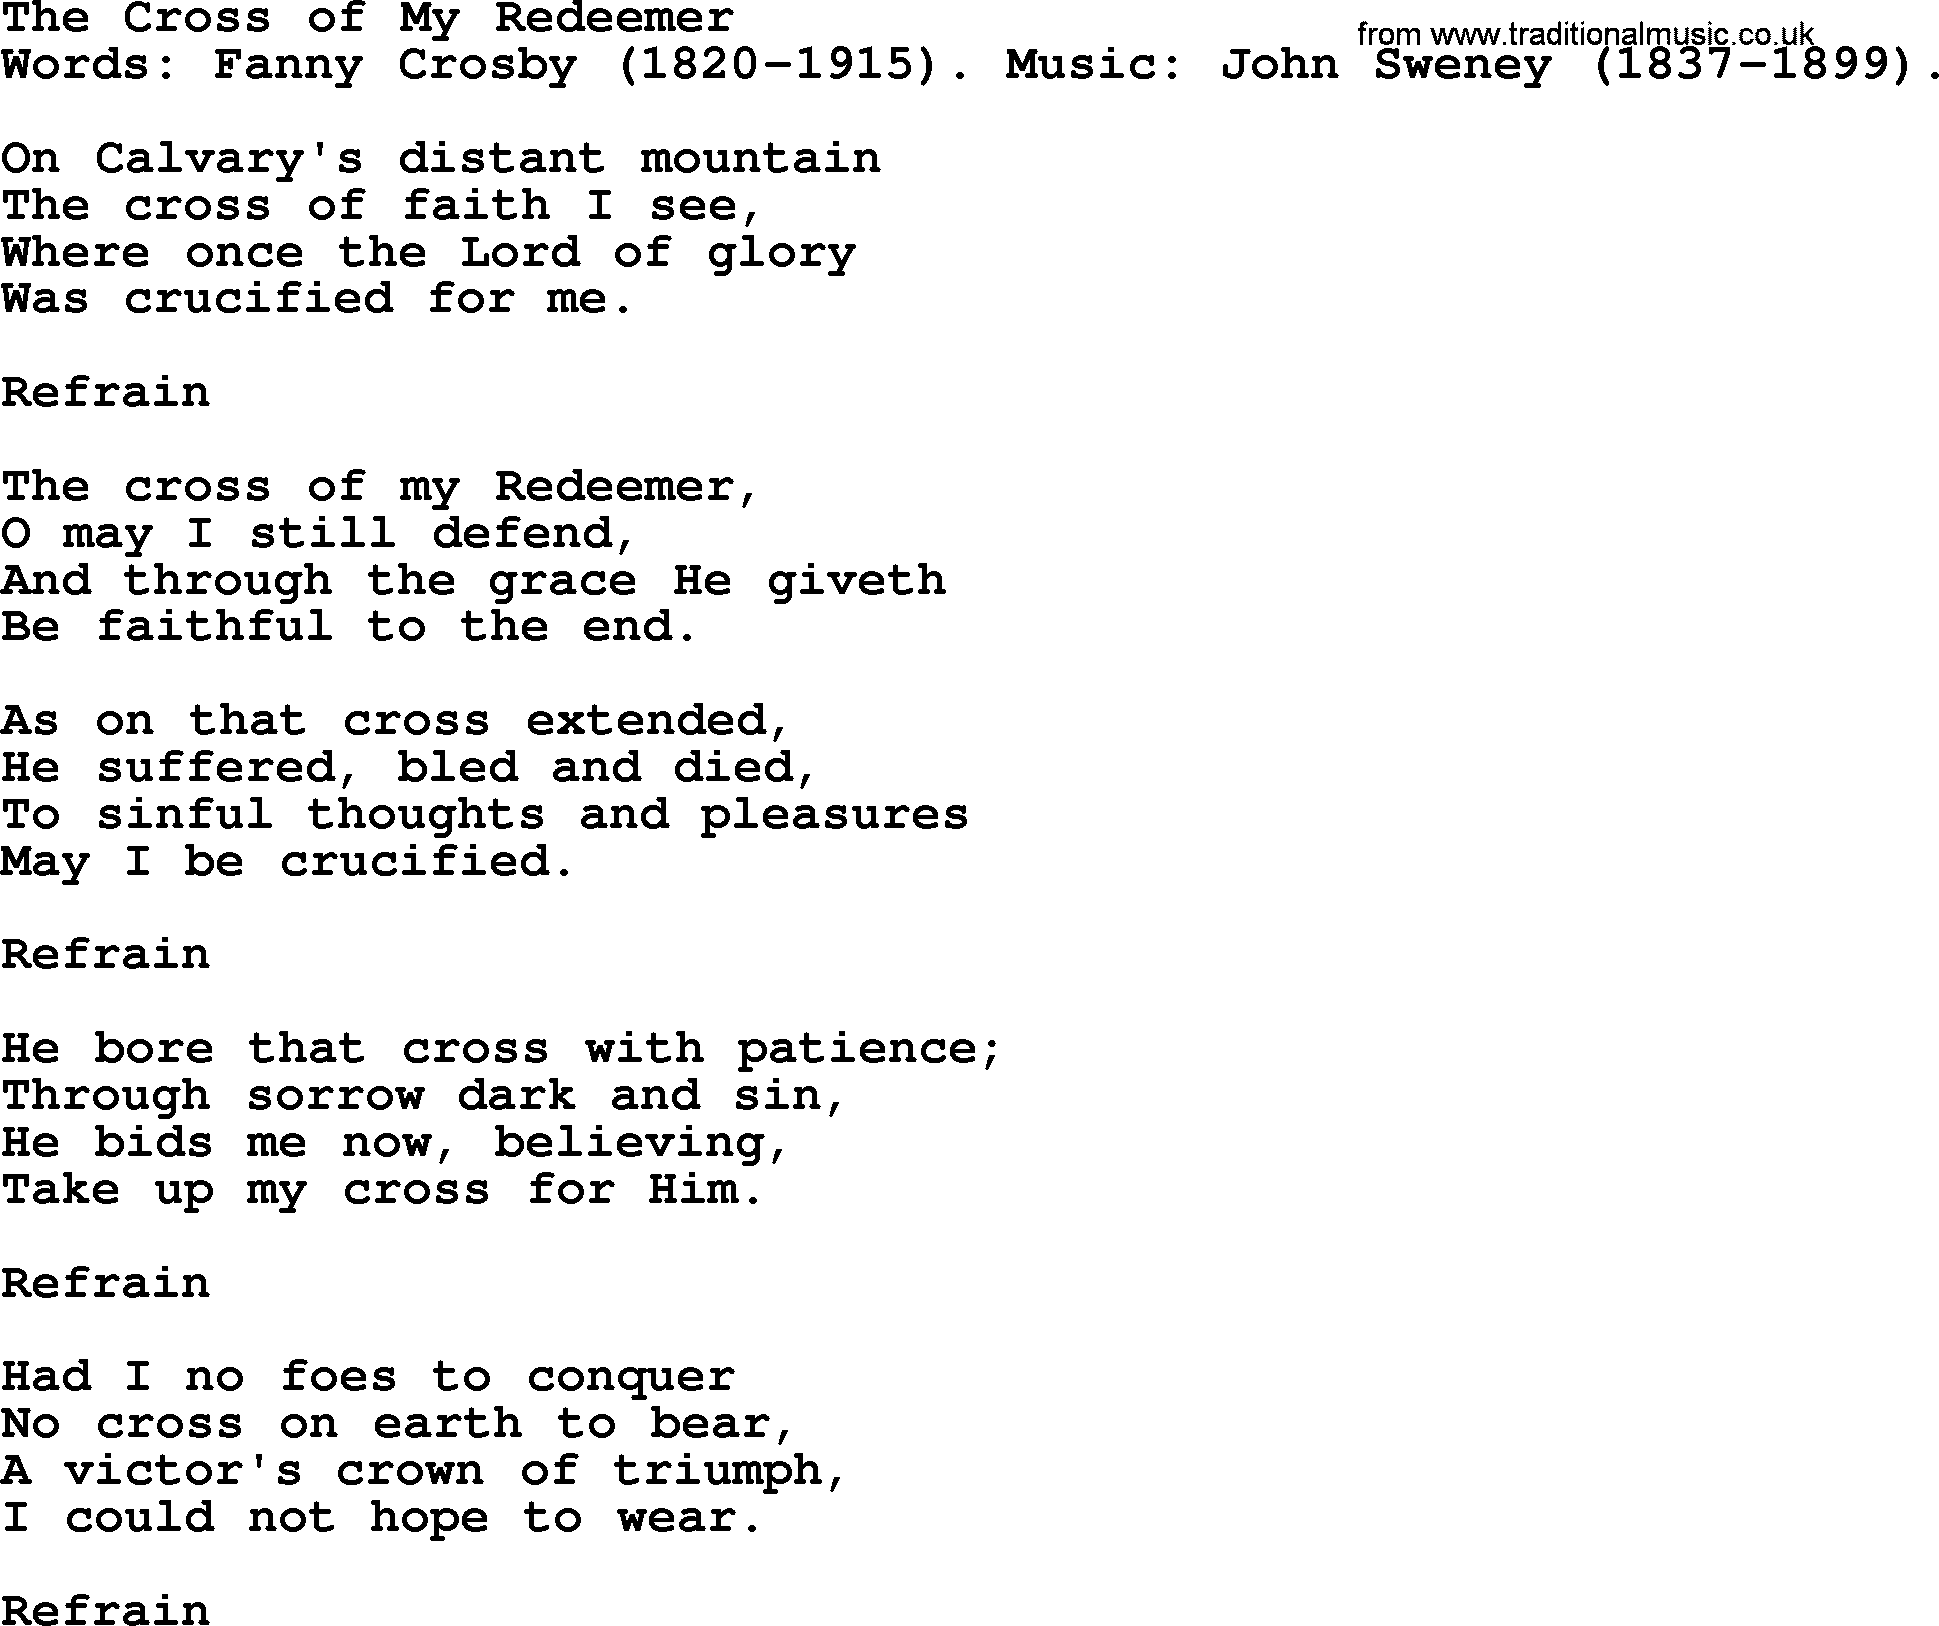 Fanny Crosby song: The Cross Of My Redeemer, lyrics